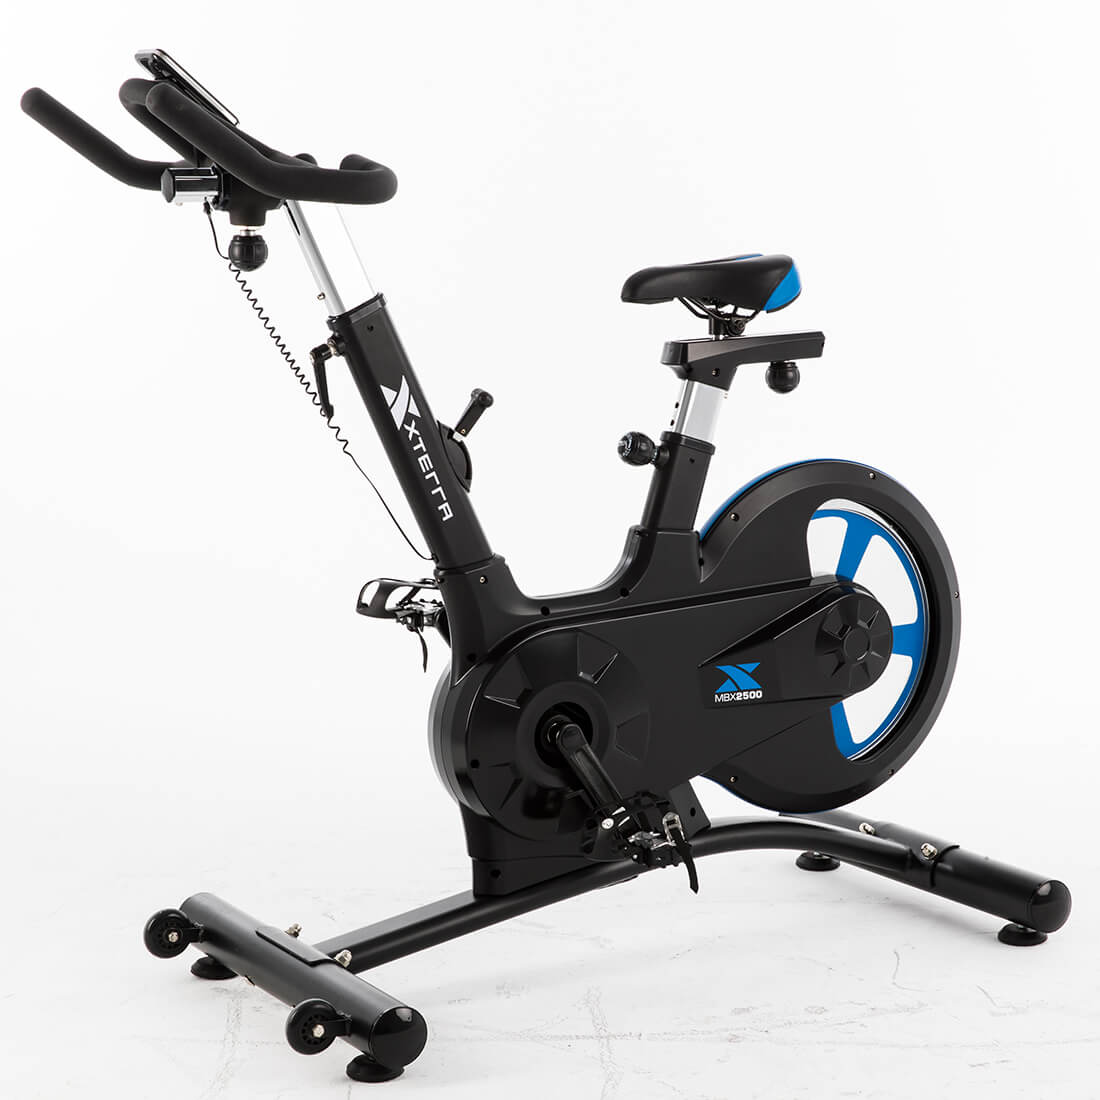 xterra fitness mbx2500 indoor exercise bike